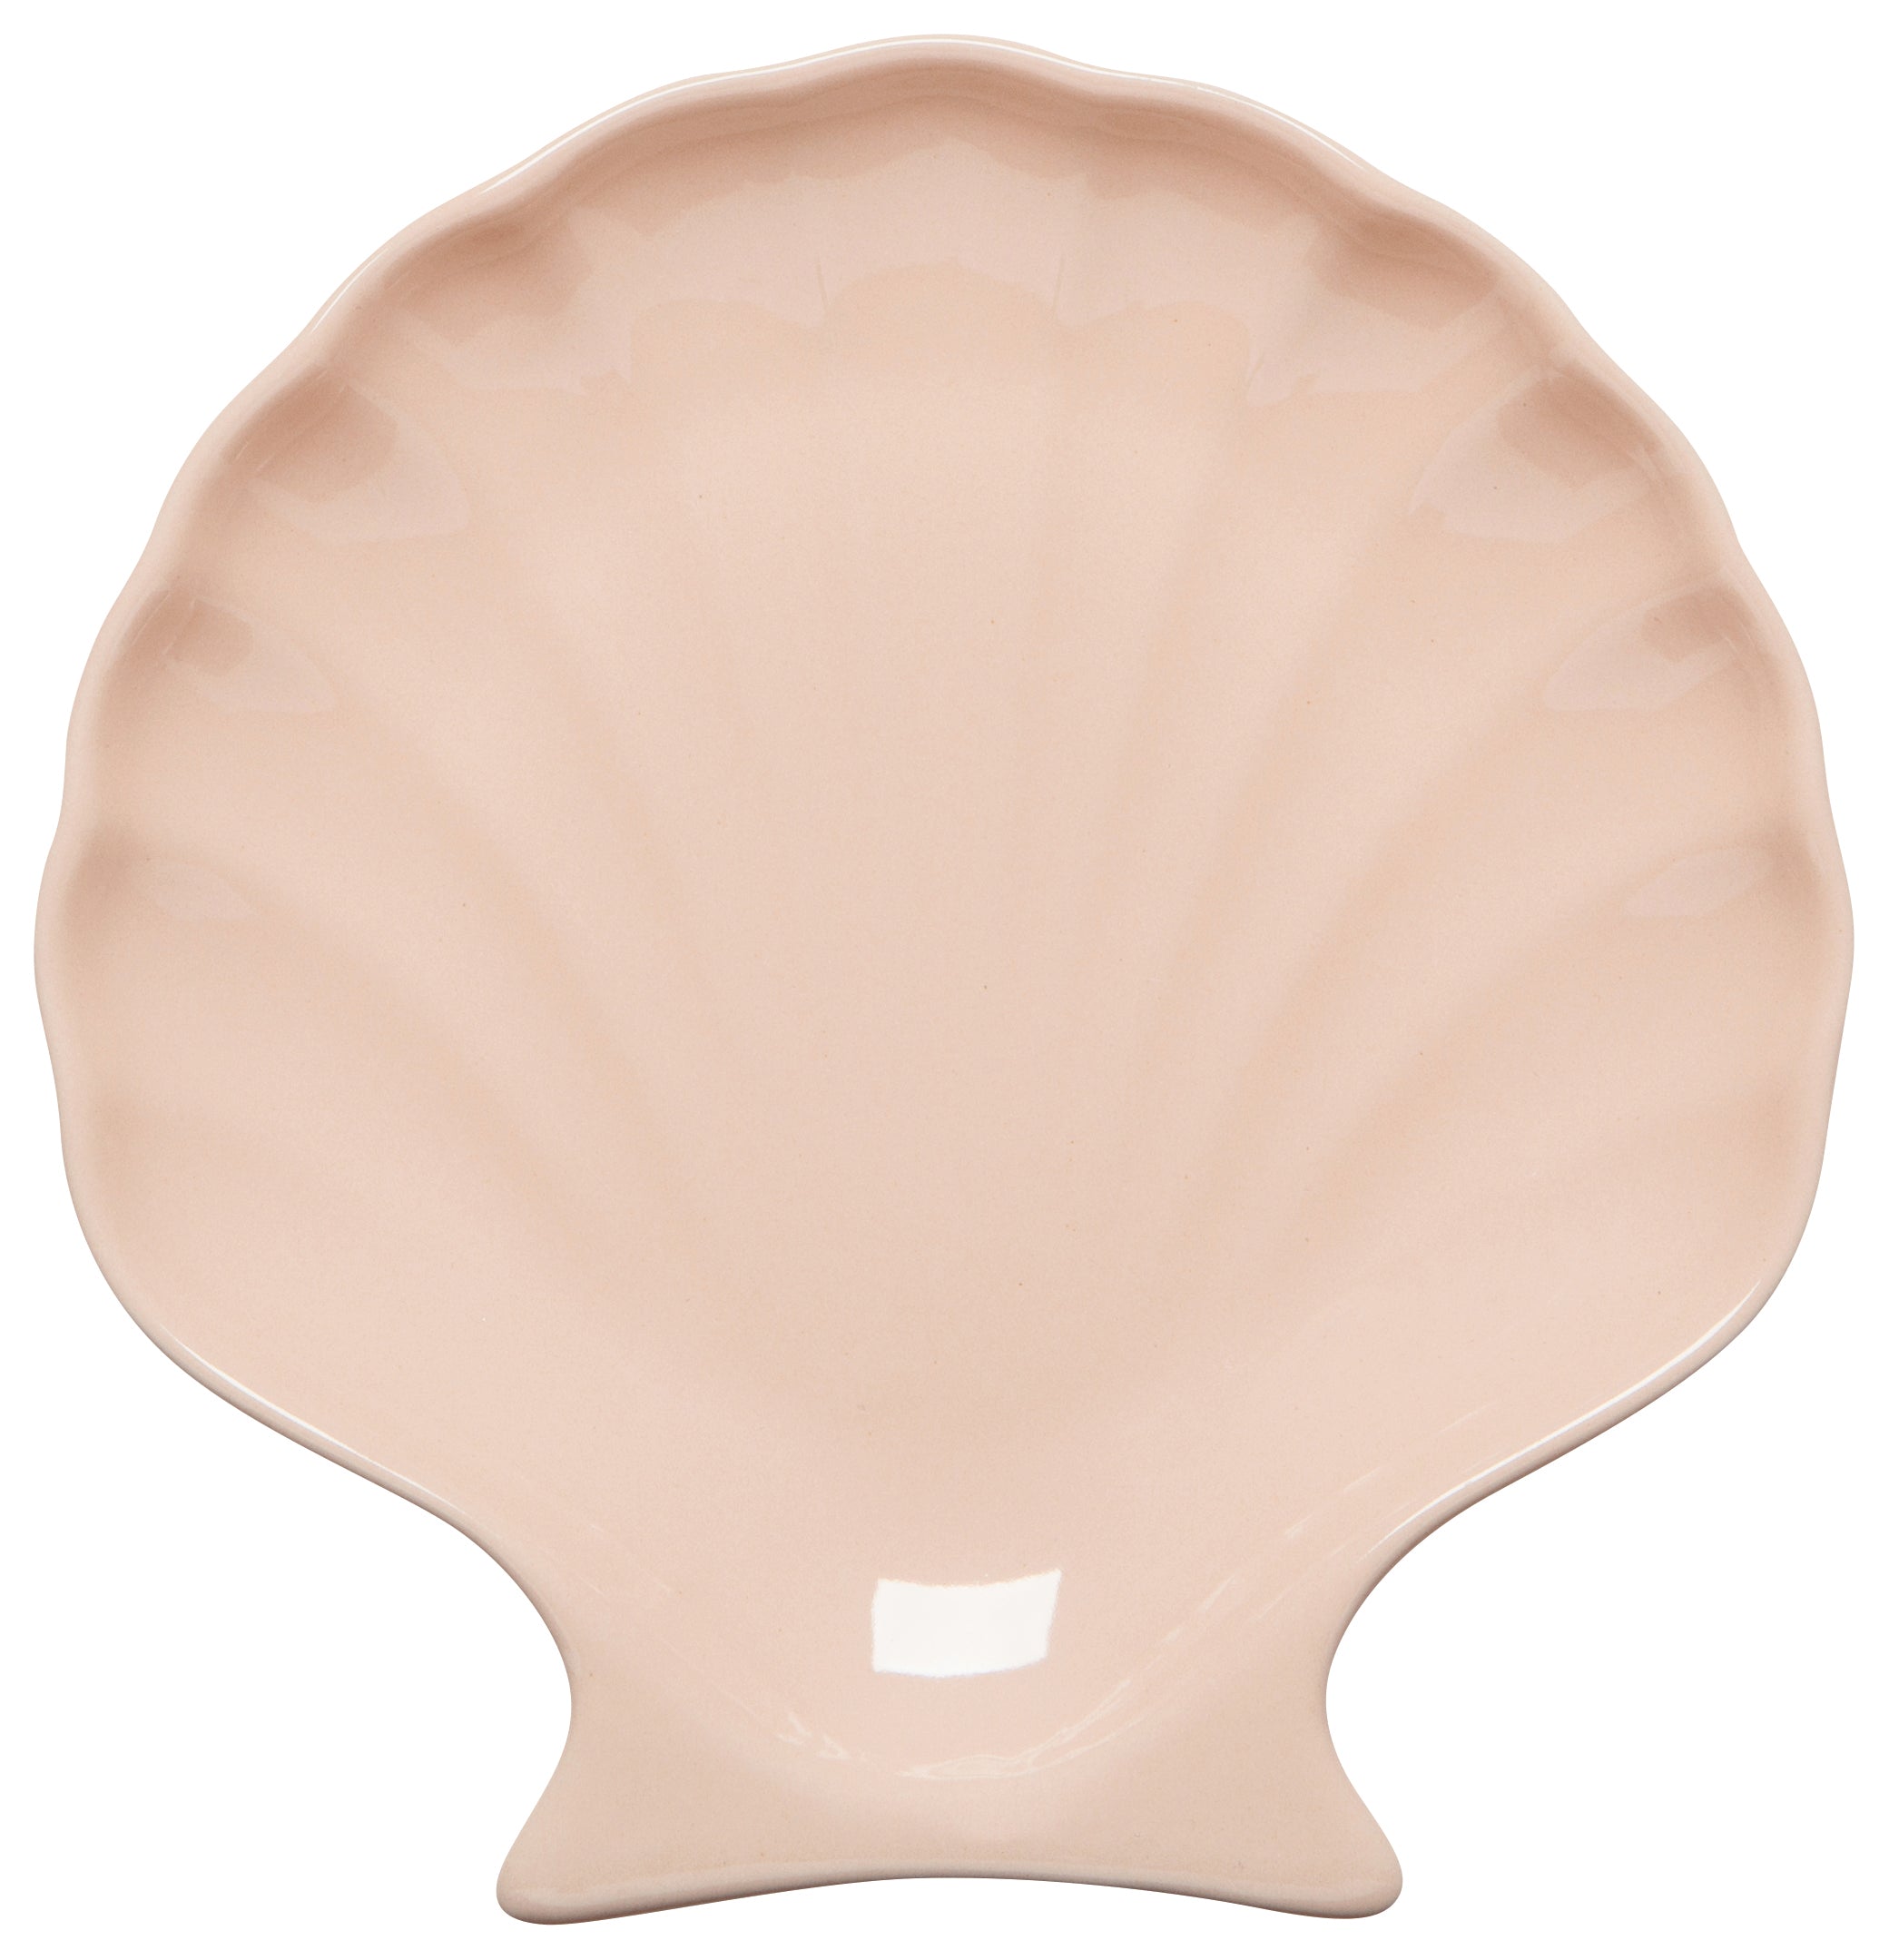 Seaside Shells Appetizer Plates Set of 4